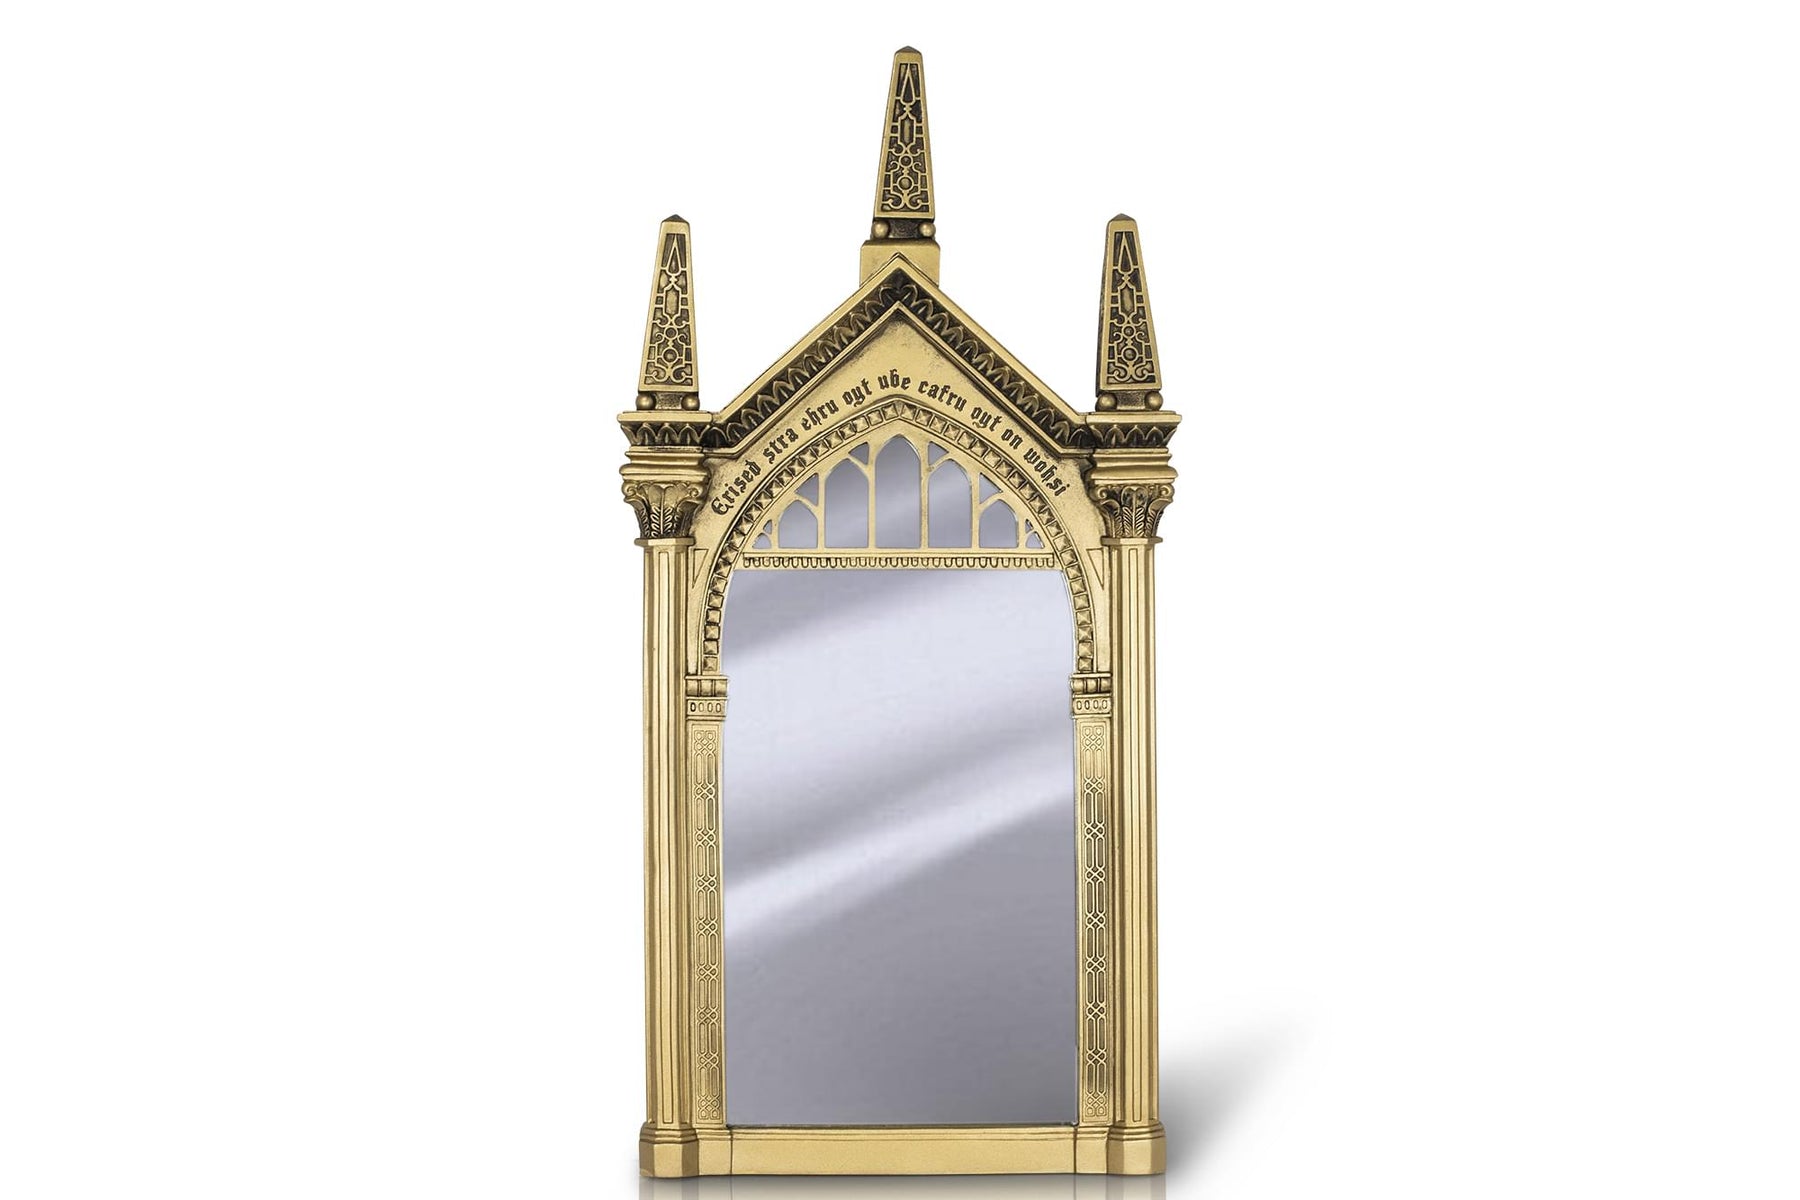 Harry Potter Replica Mirror of Erised Wall Decor | 25 x 10 Inches